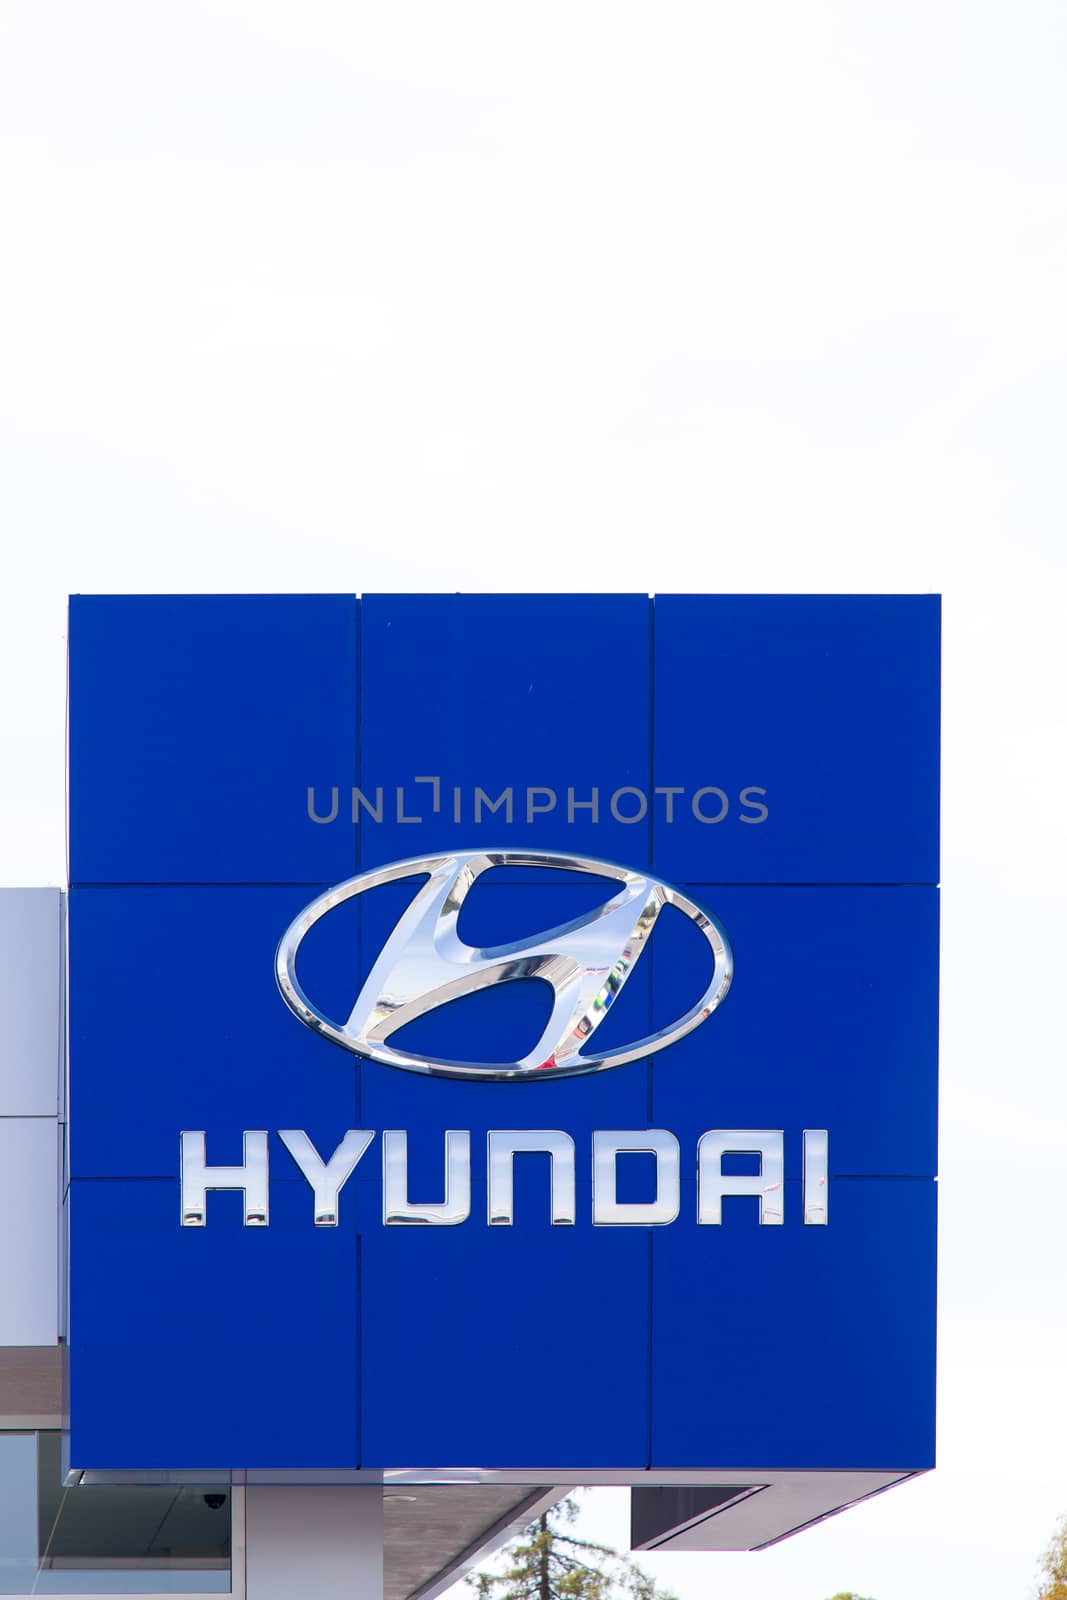 SAN JOSE, CA/USA - MAY 24, 2014: Hyundai automobile dealership sign. Hyundai is a South Korean multinational automotive manufacturer headquartered in Seoul, South Korea.